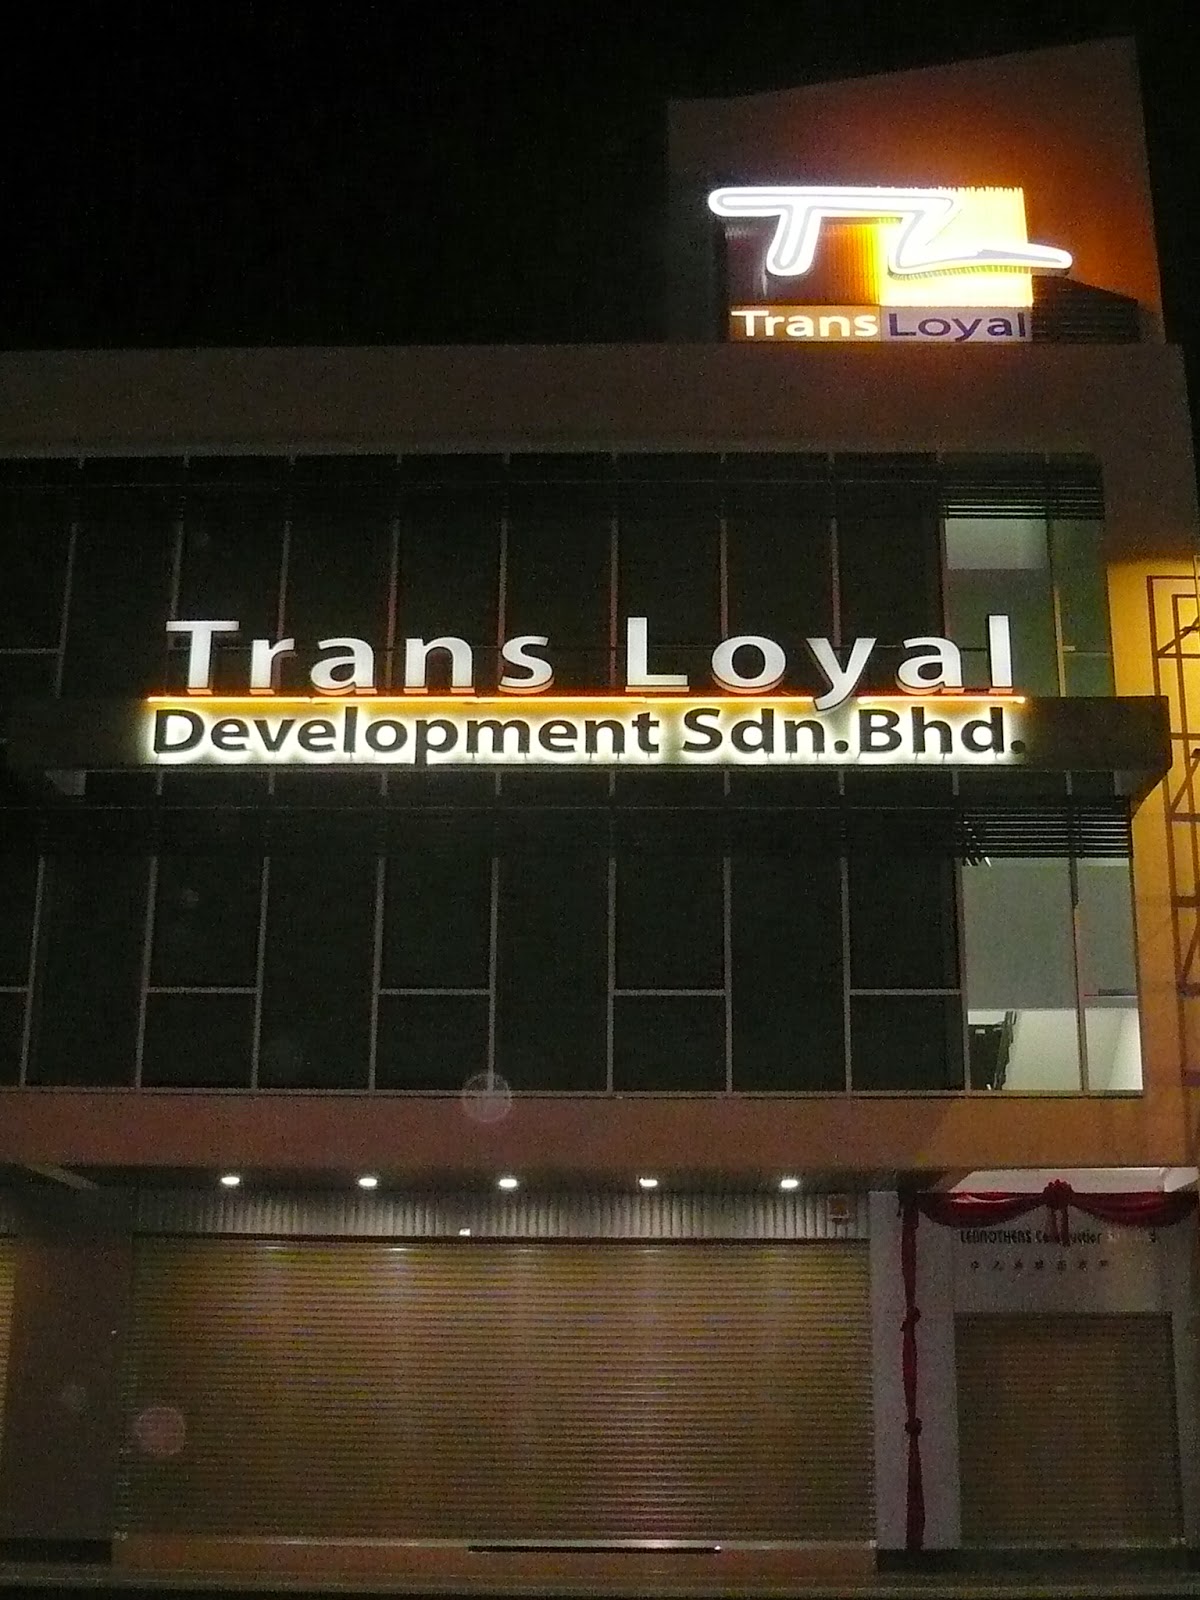 Trans loyal development sdn bhd